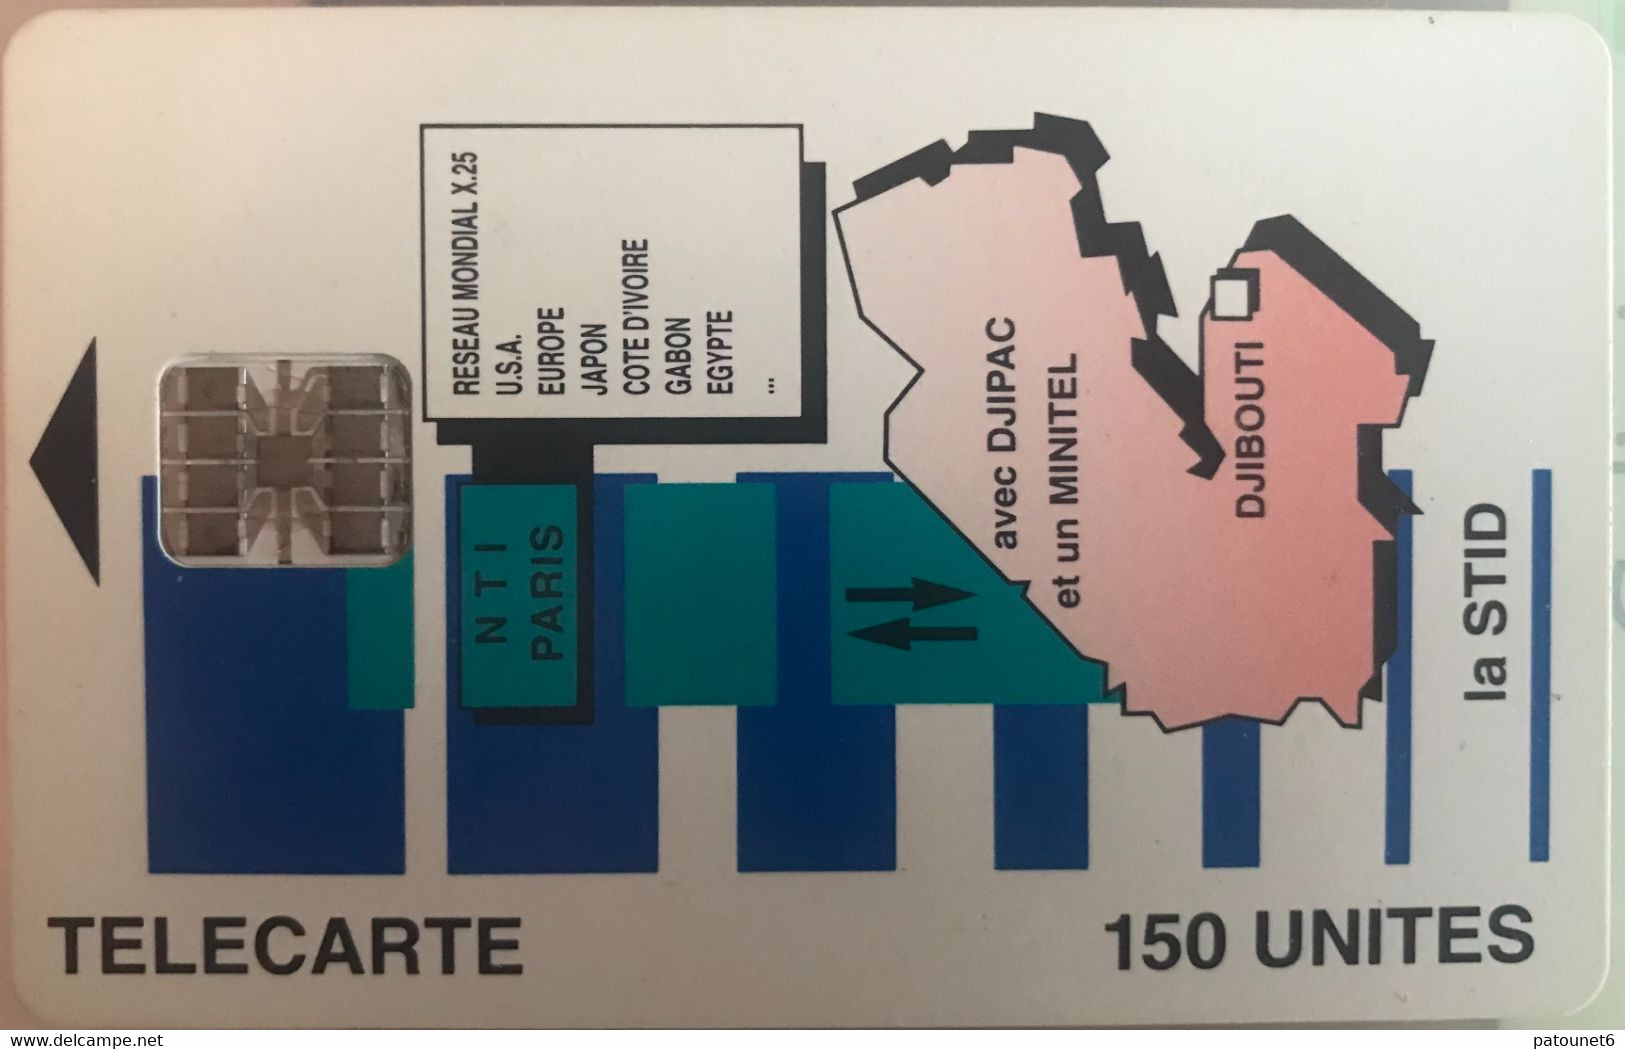 DJIBOUTI  -  Phonecard  -  OPT DJIBOUTI  -  SC 7  -  Carte   -  150 Unités - Dschibuti